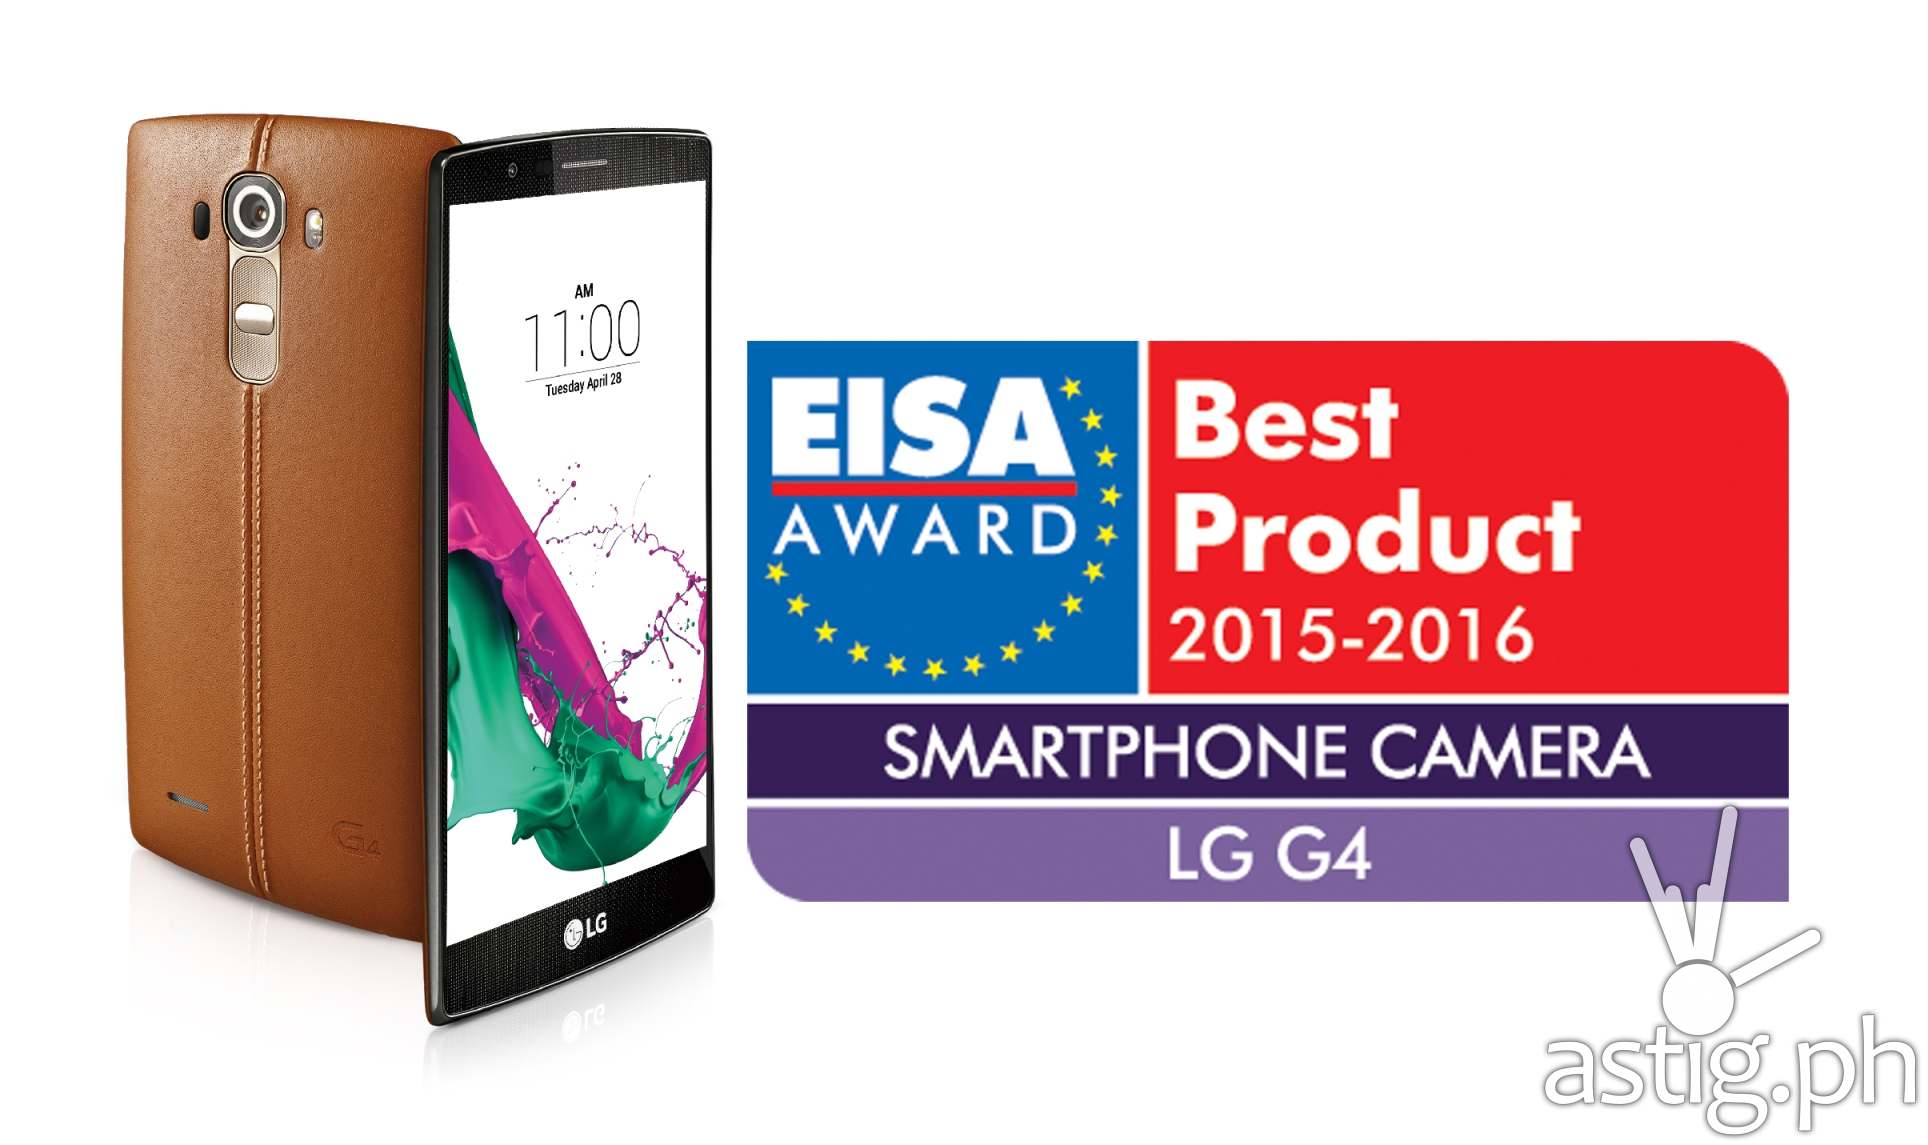 LG G4 EISA Award